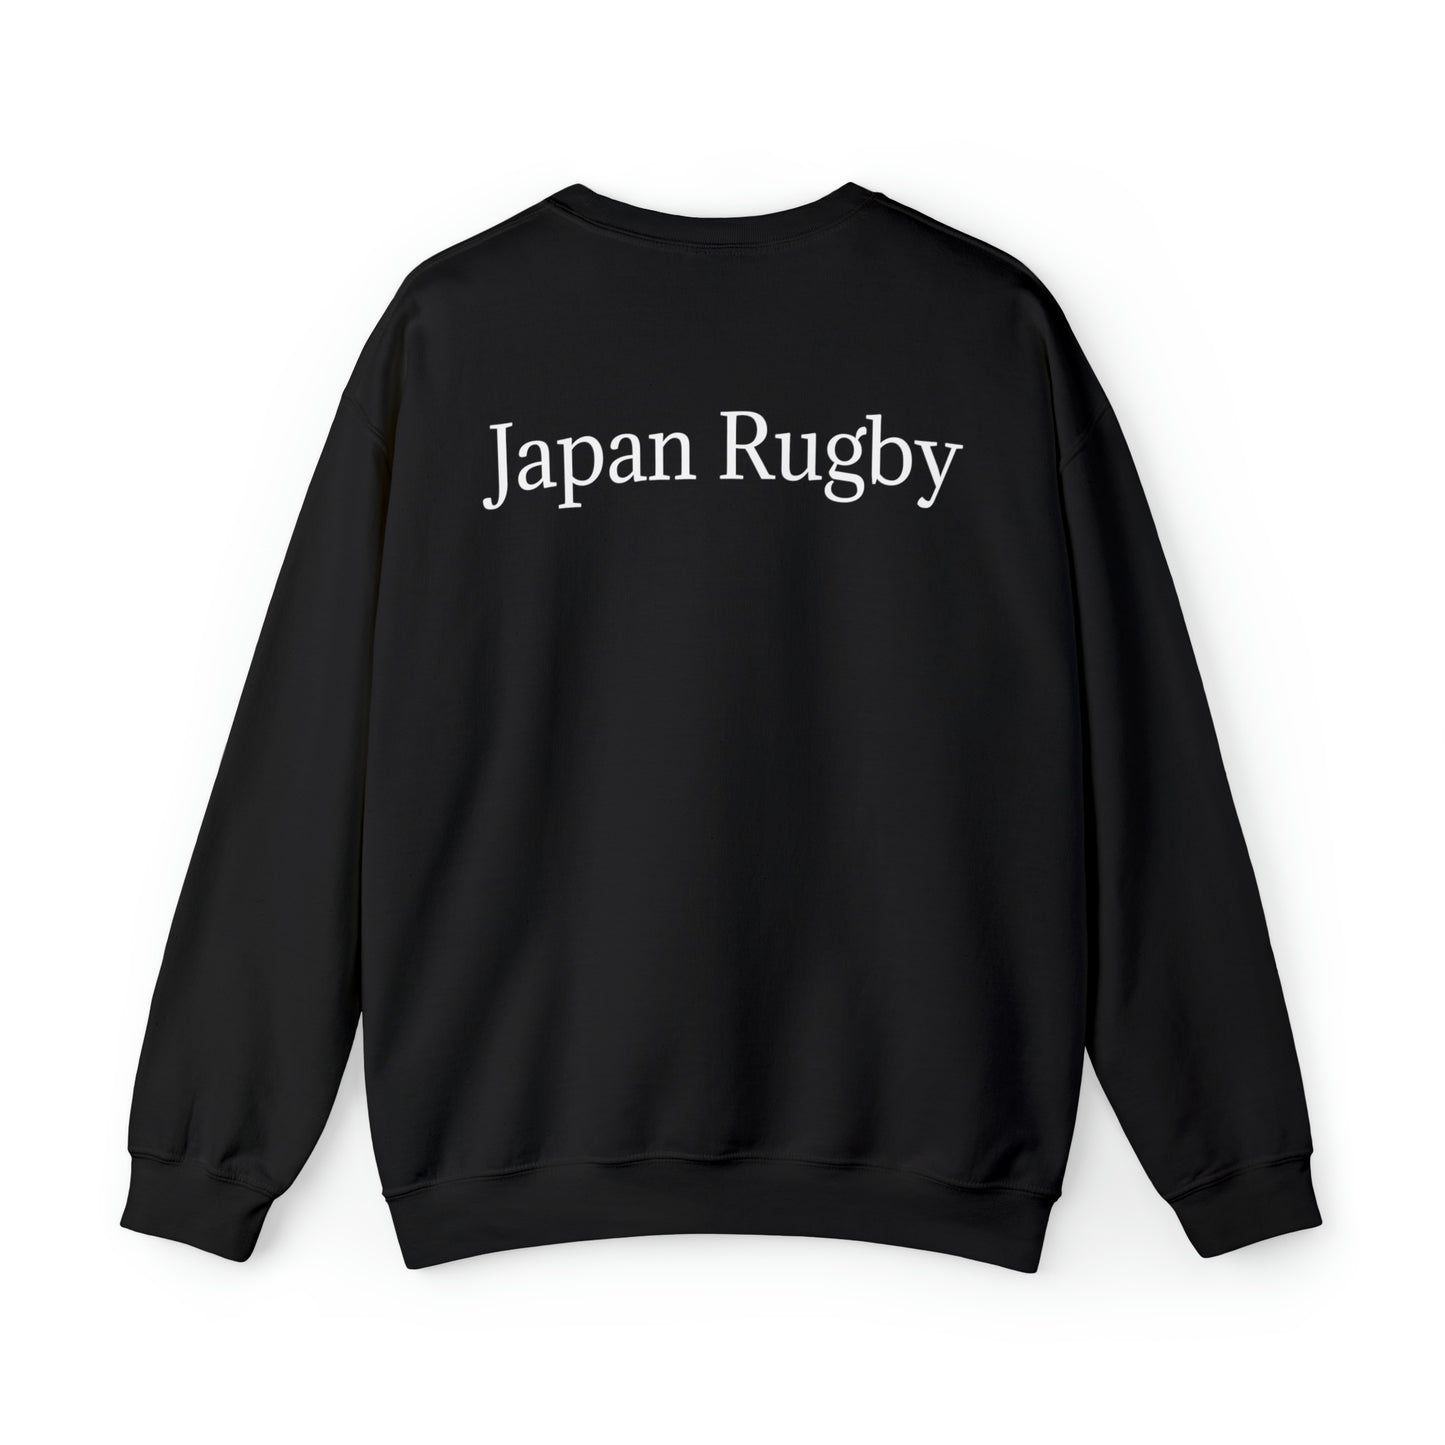 Japan lifting RWC - light sweatshirts